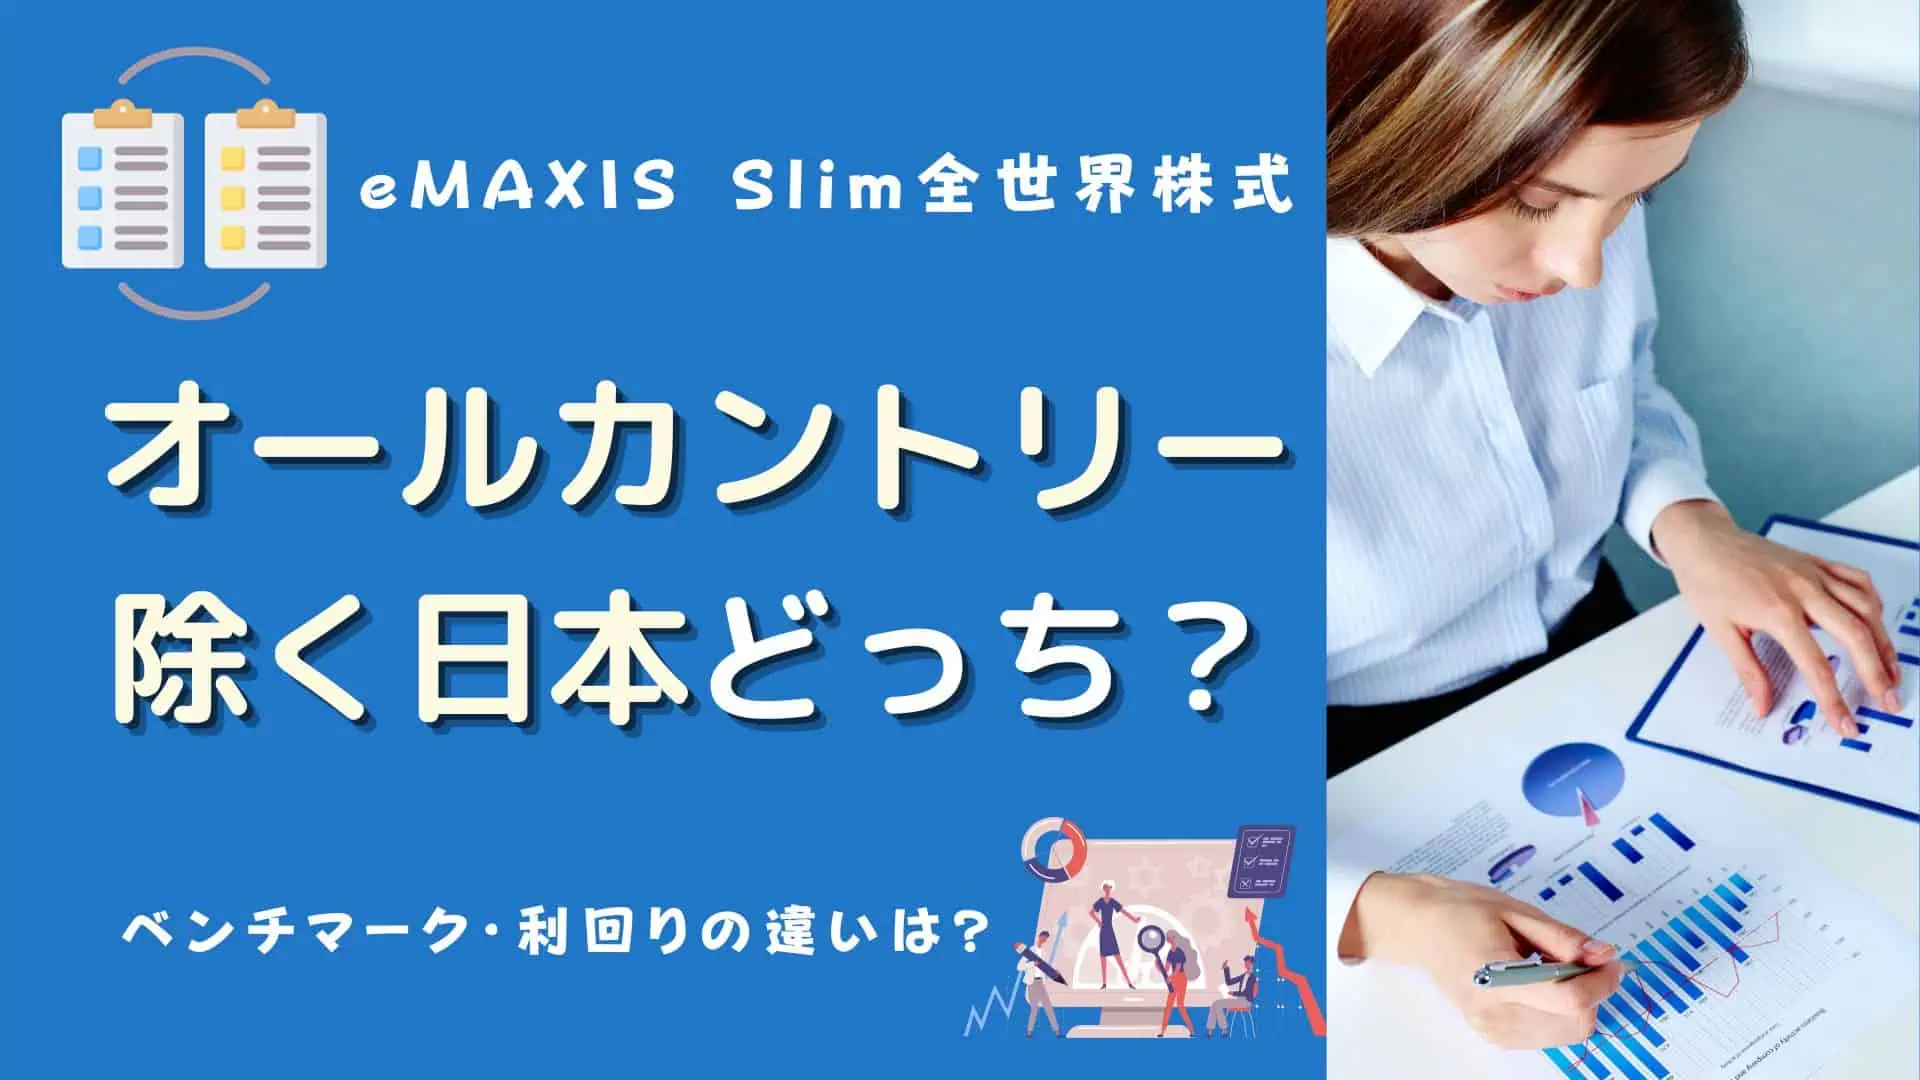 emaxis slim 全世界株式 除く日本 どっち